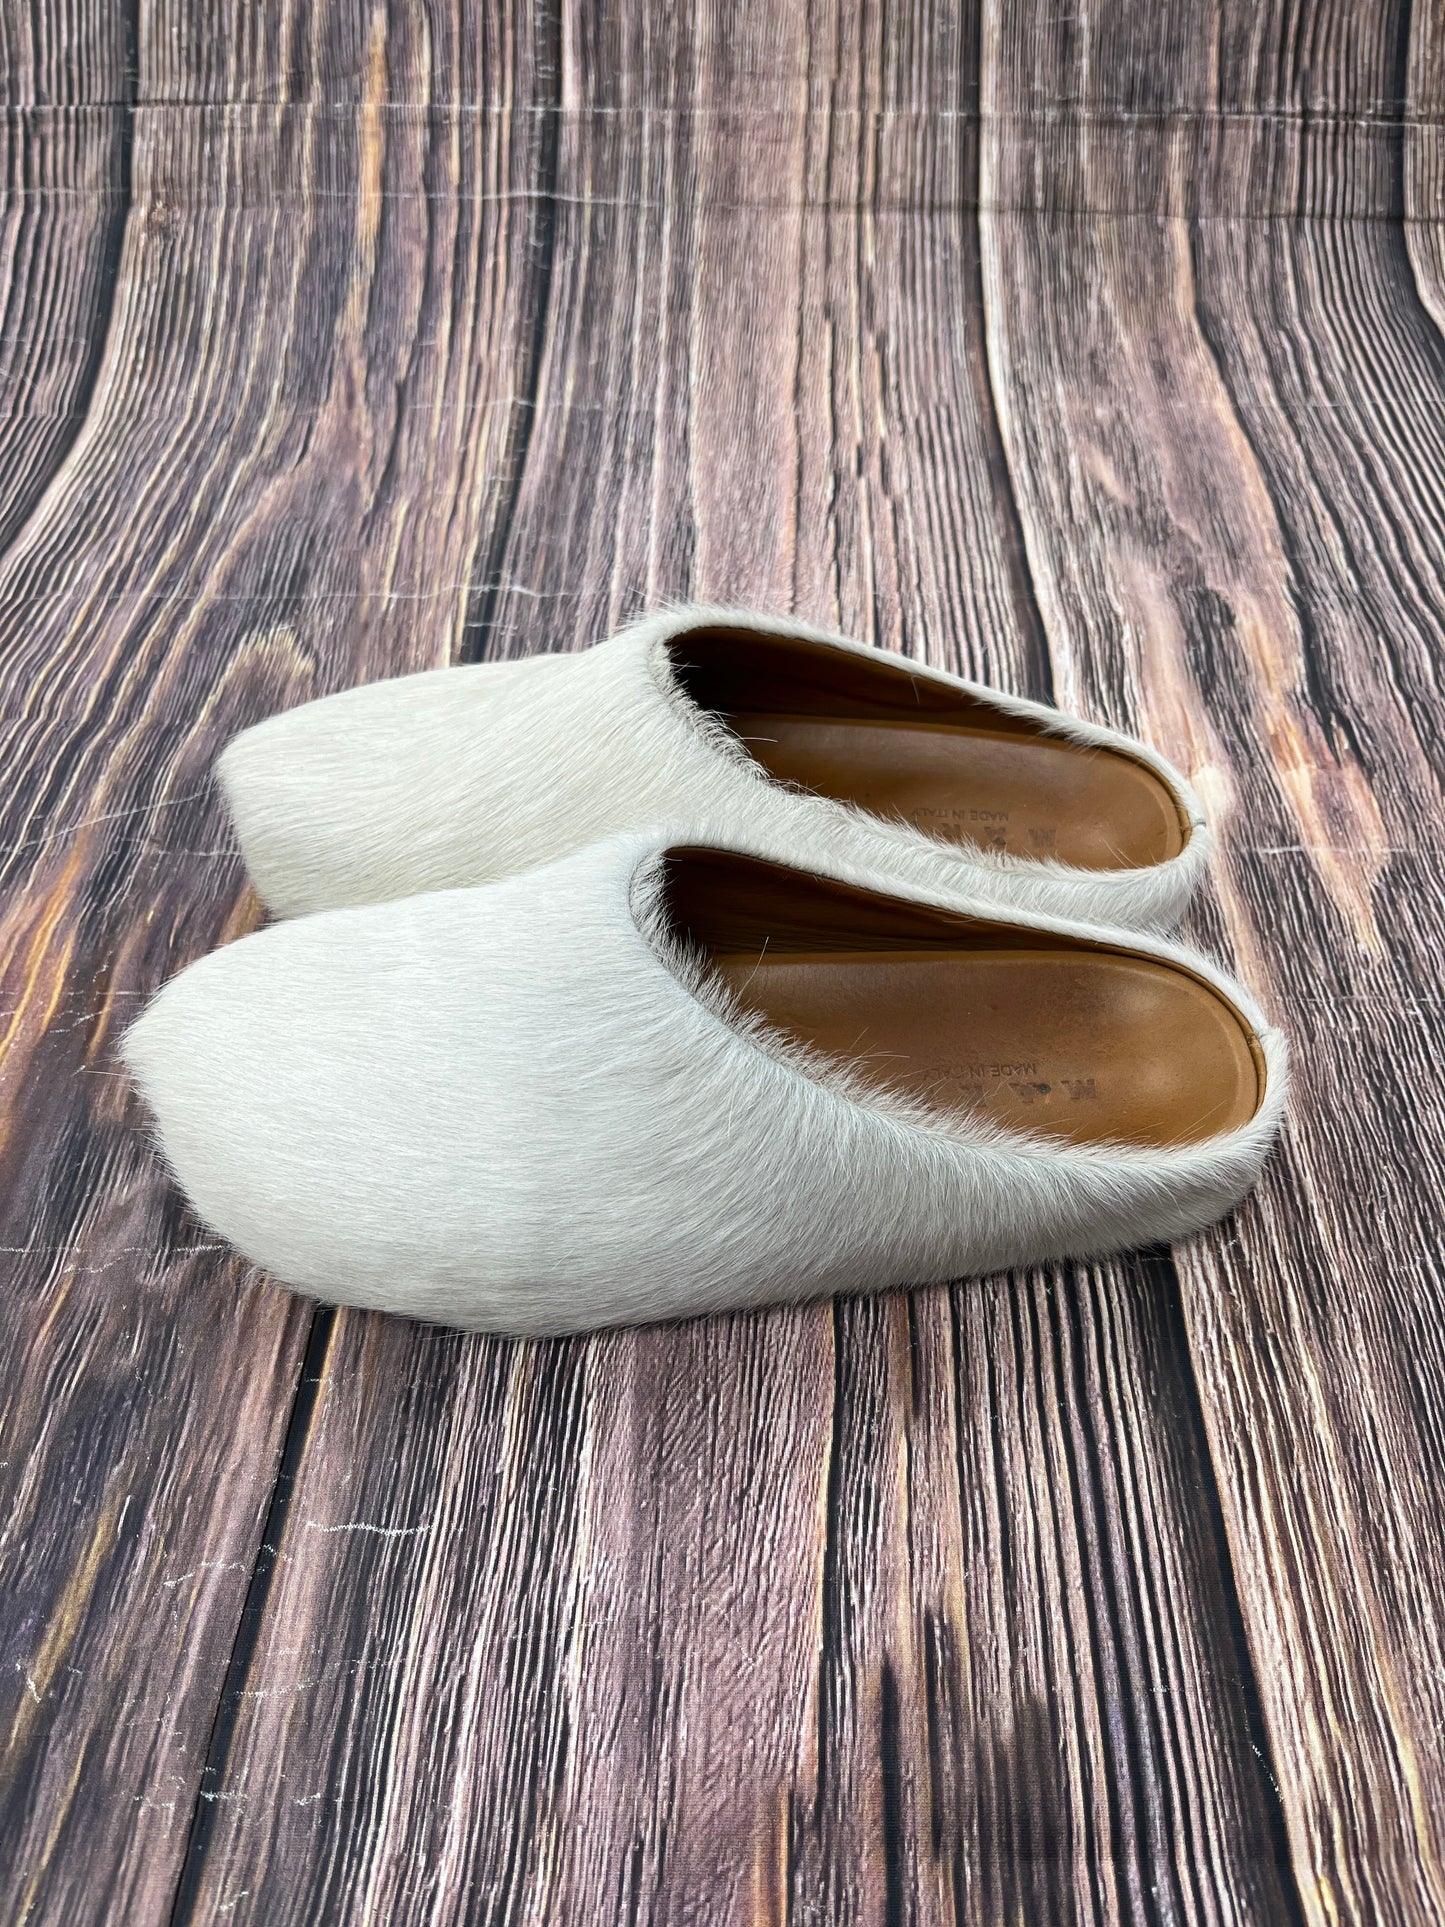 Shoes Flats Mule & Slide By Cma  Size: 10